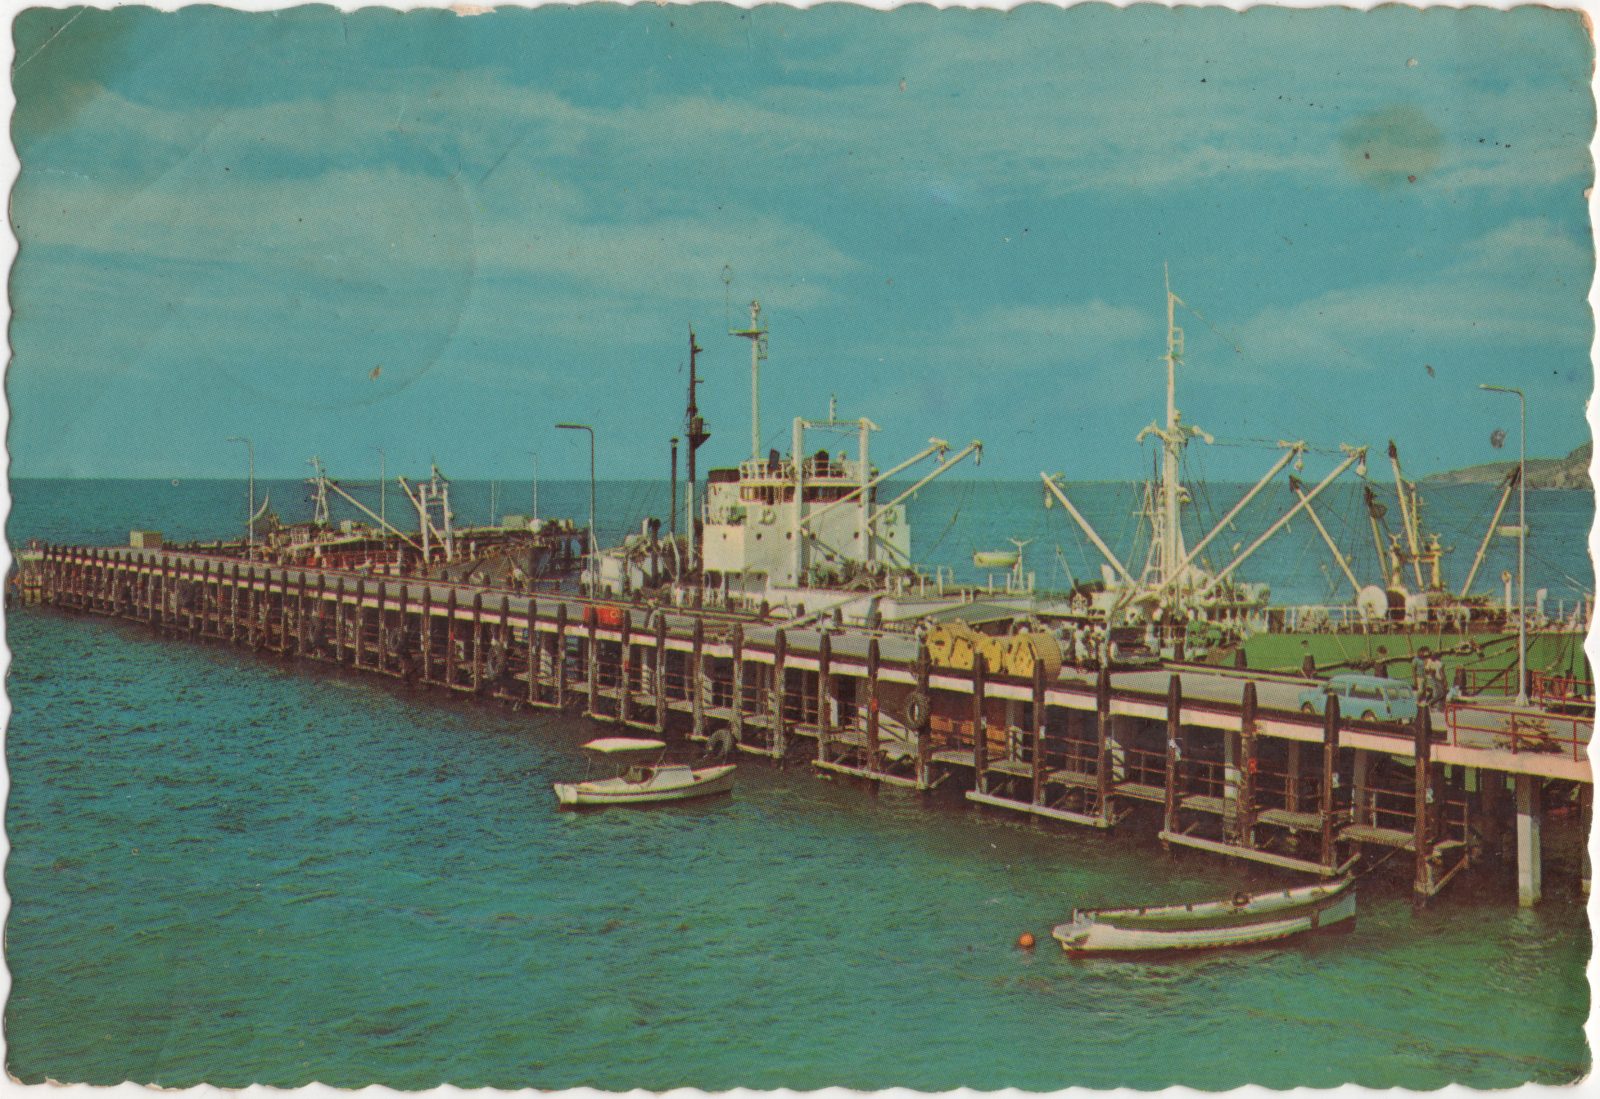 Cruise ship terminal, Philipsburg Sint Maarten. Color postcard.

Barbara Cannegieter Collection